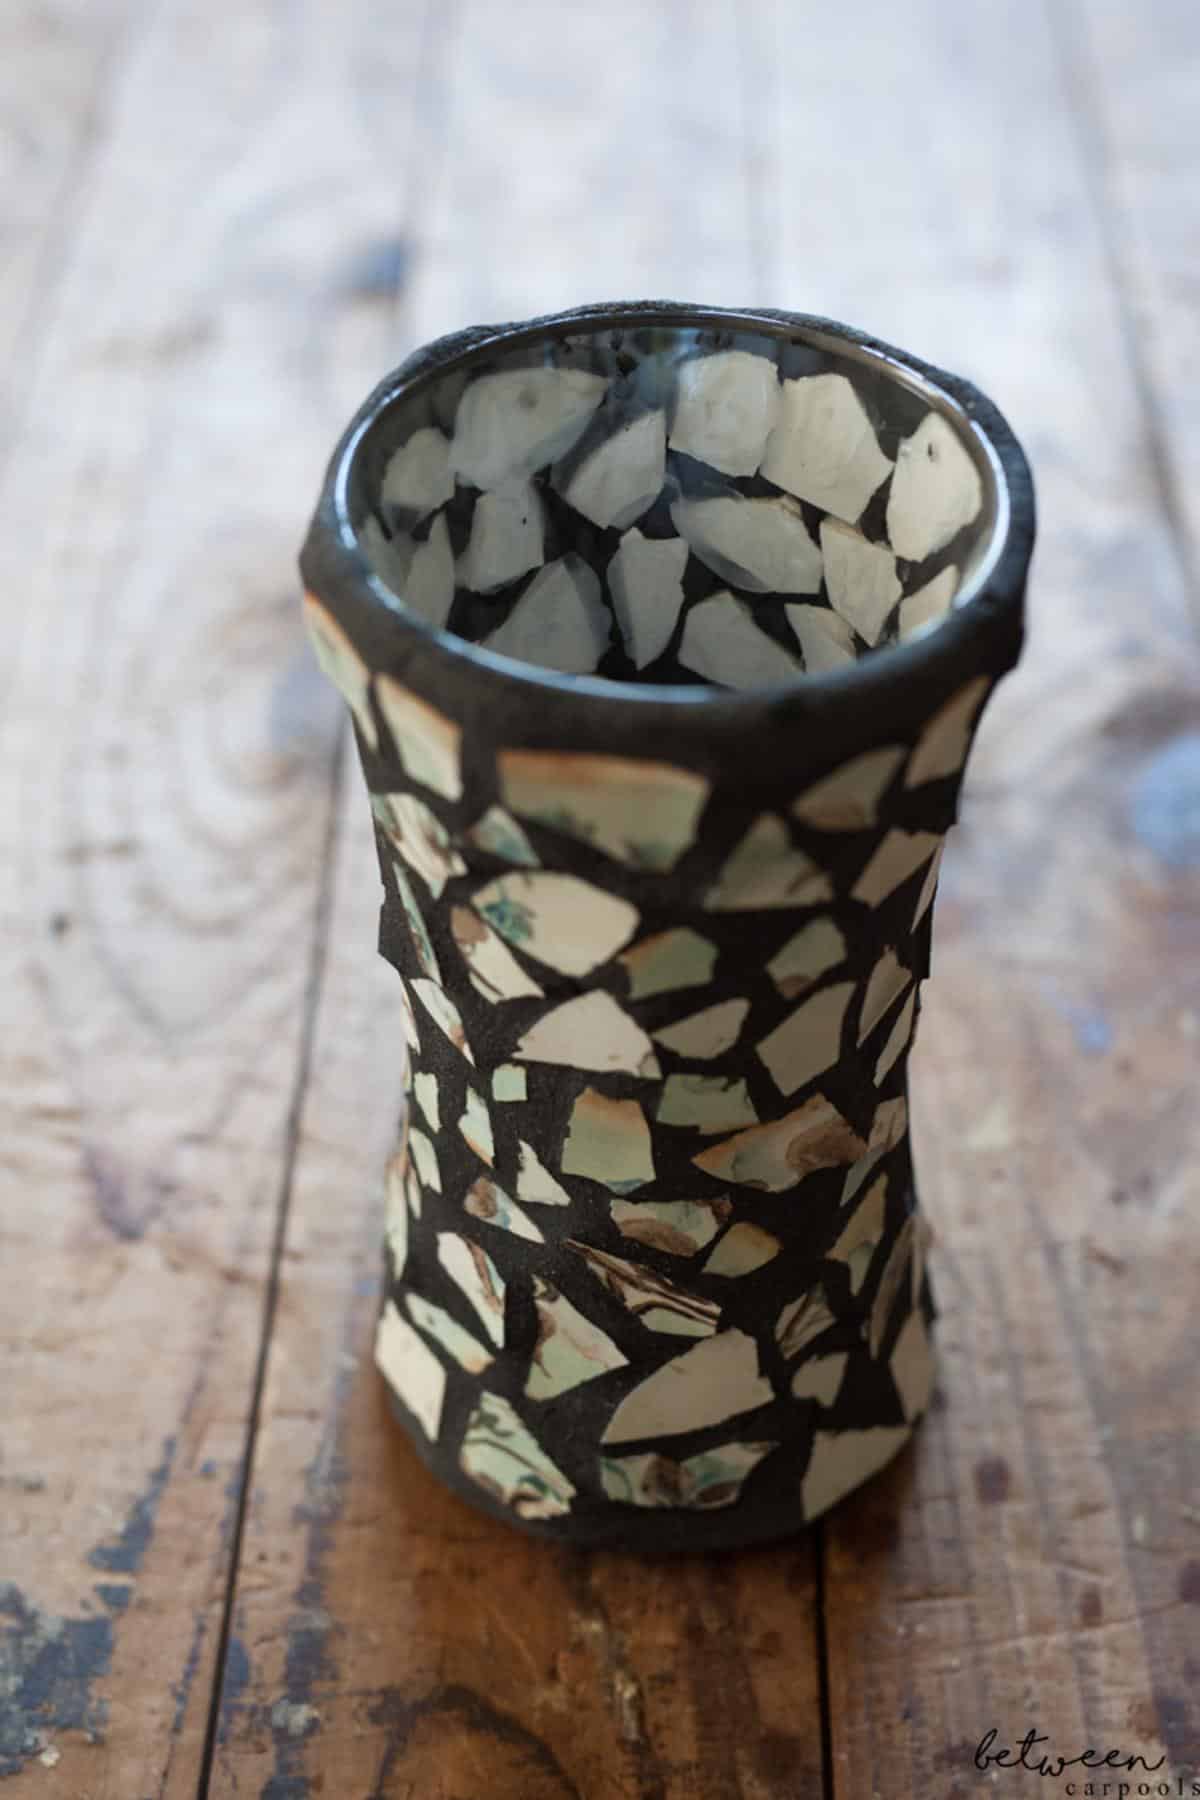 DIY Mosaic Vase